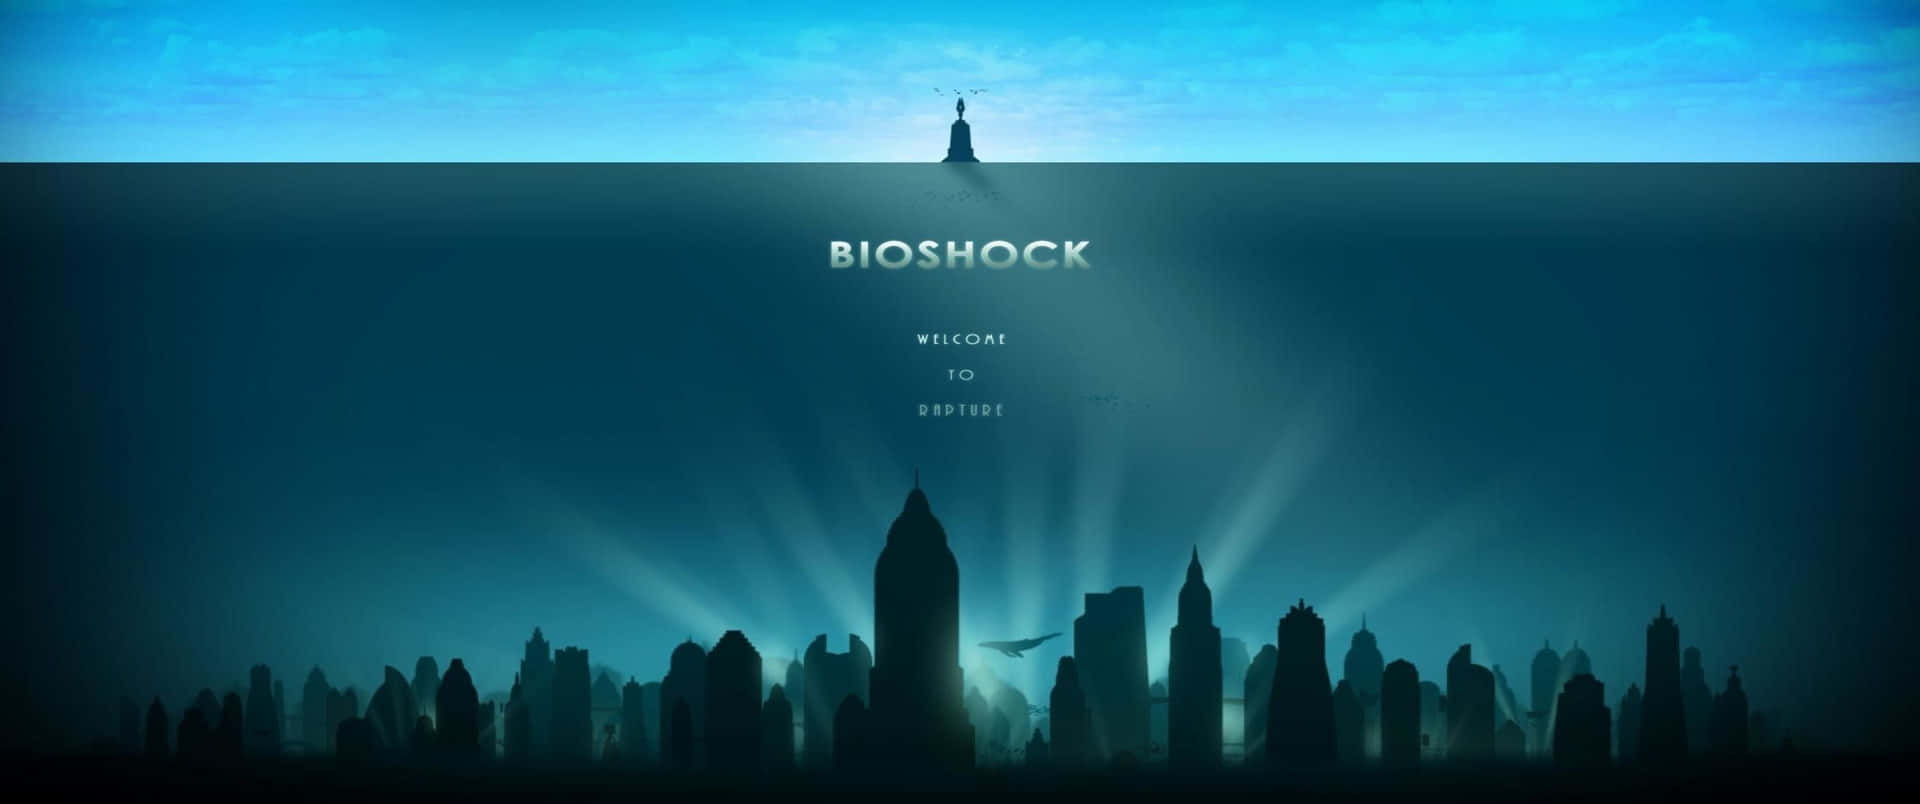 Rapture 3440x1440p Bioshock Infinite Background